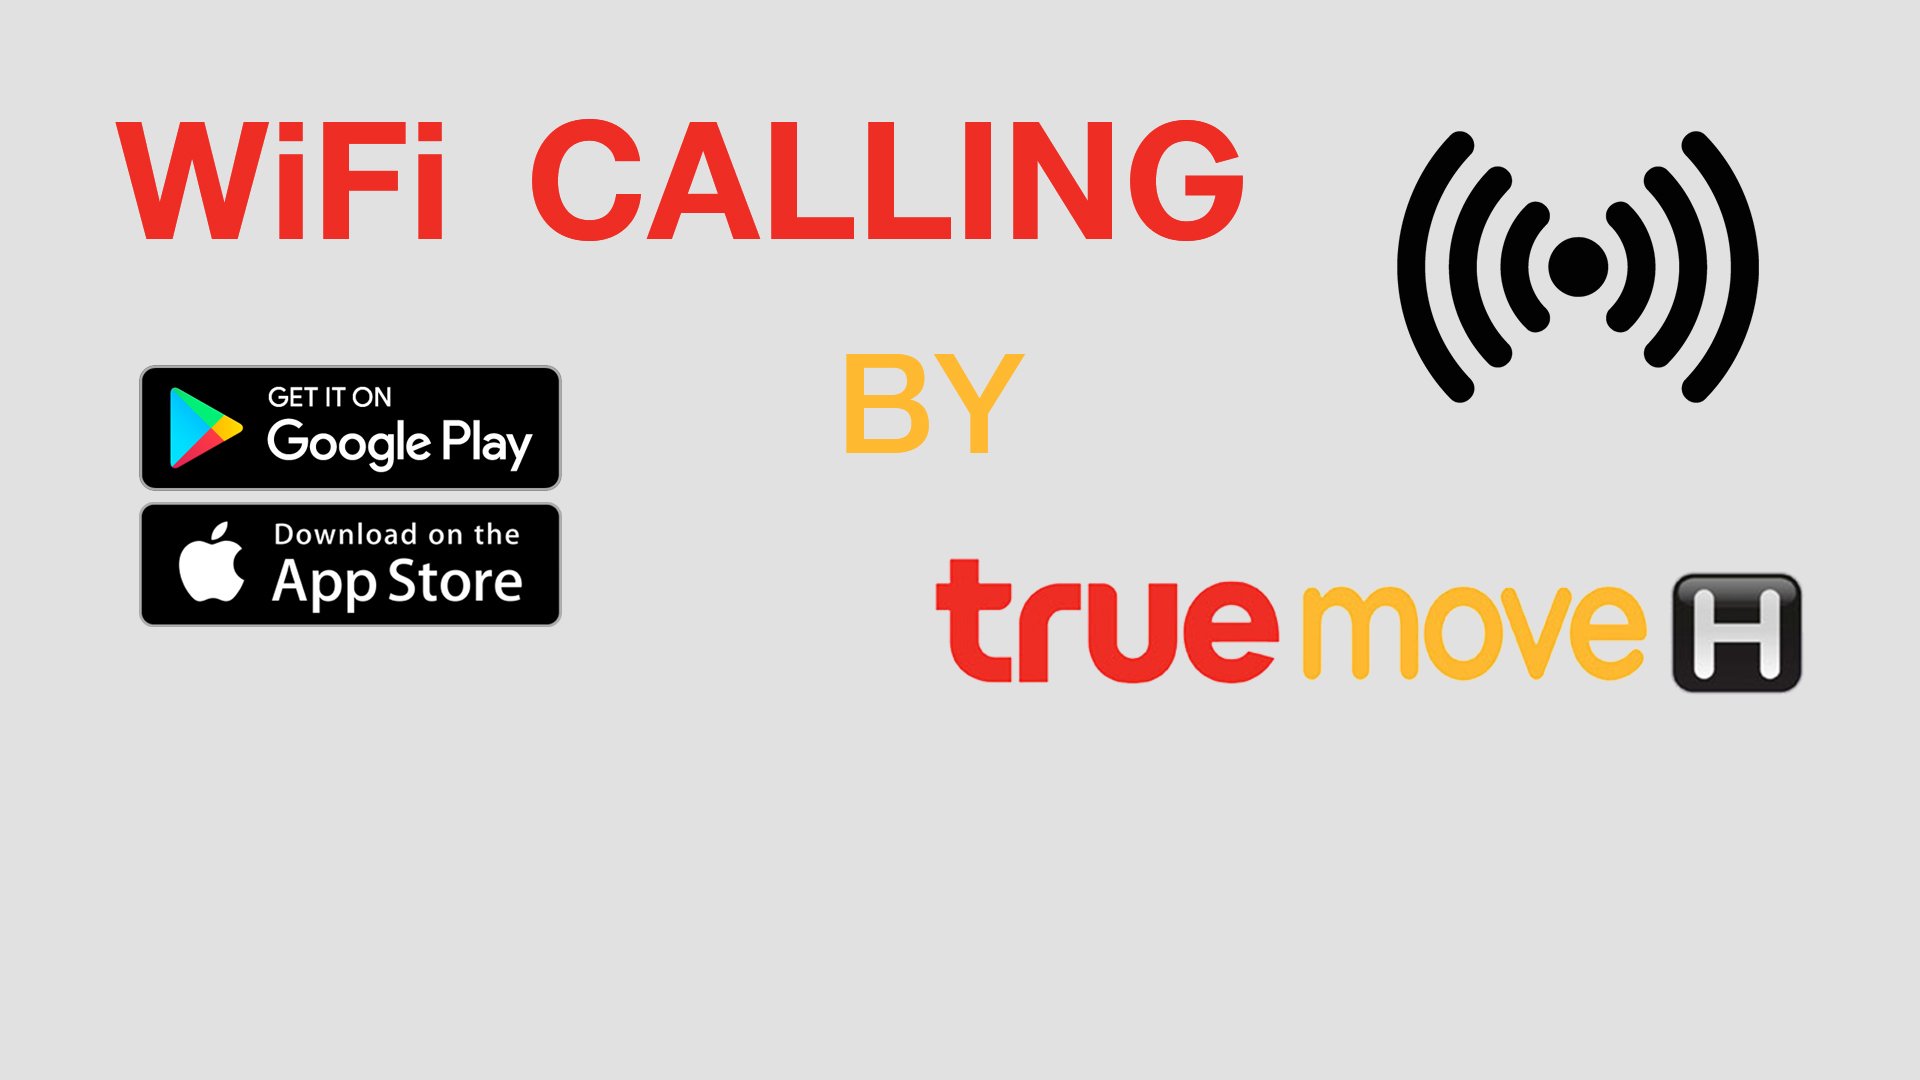 Truemove-H จัดเต็ม WiFi Calling ใช้ได้กับทุกเครื่อง